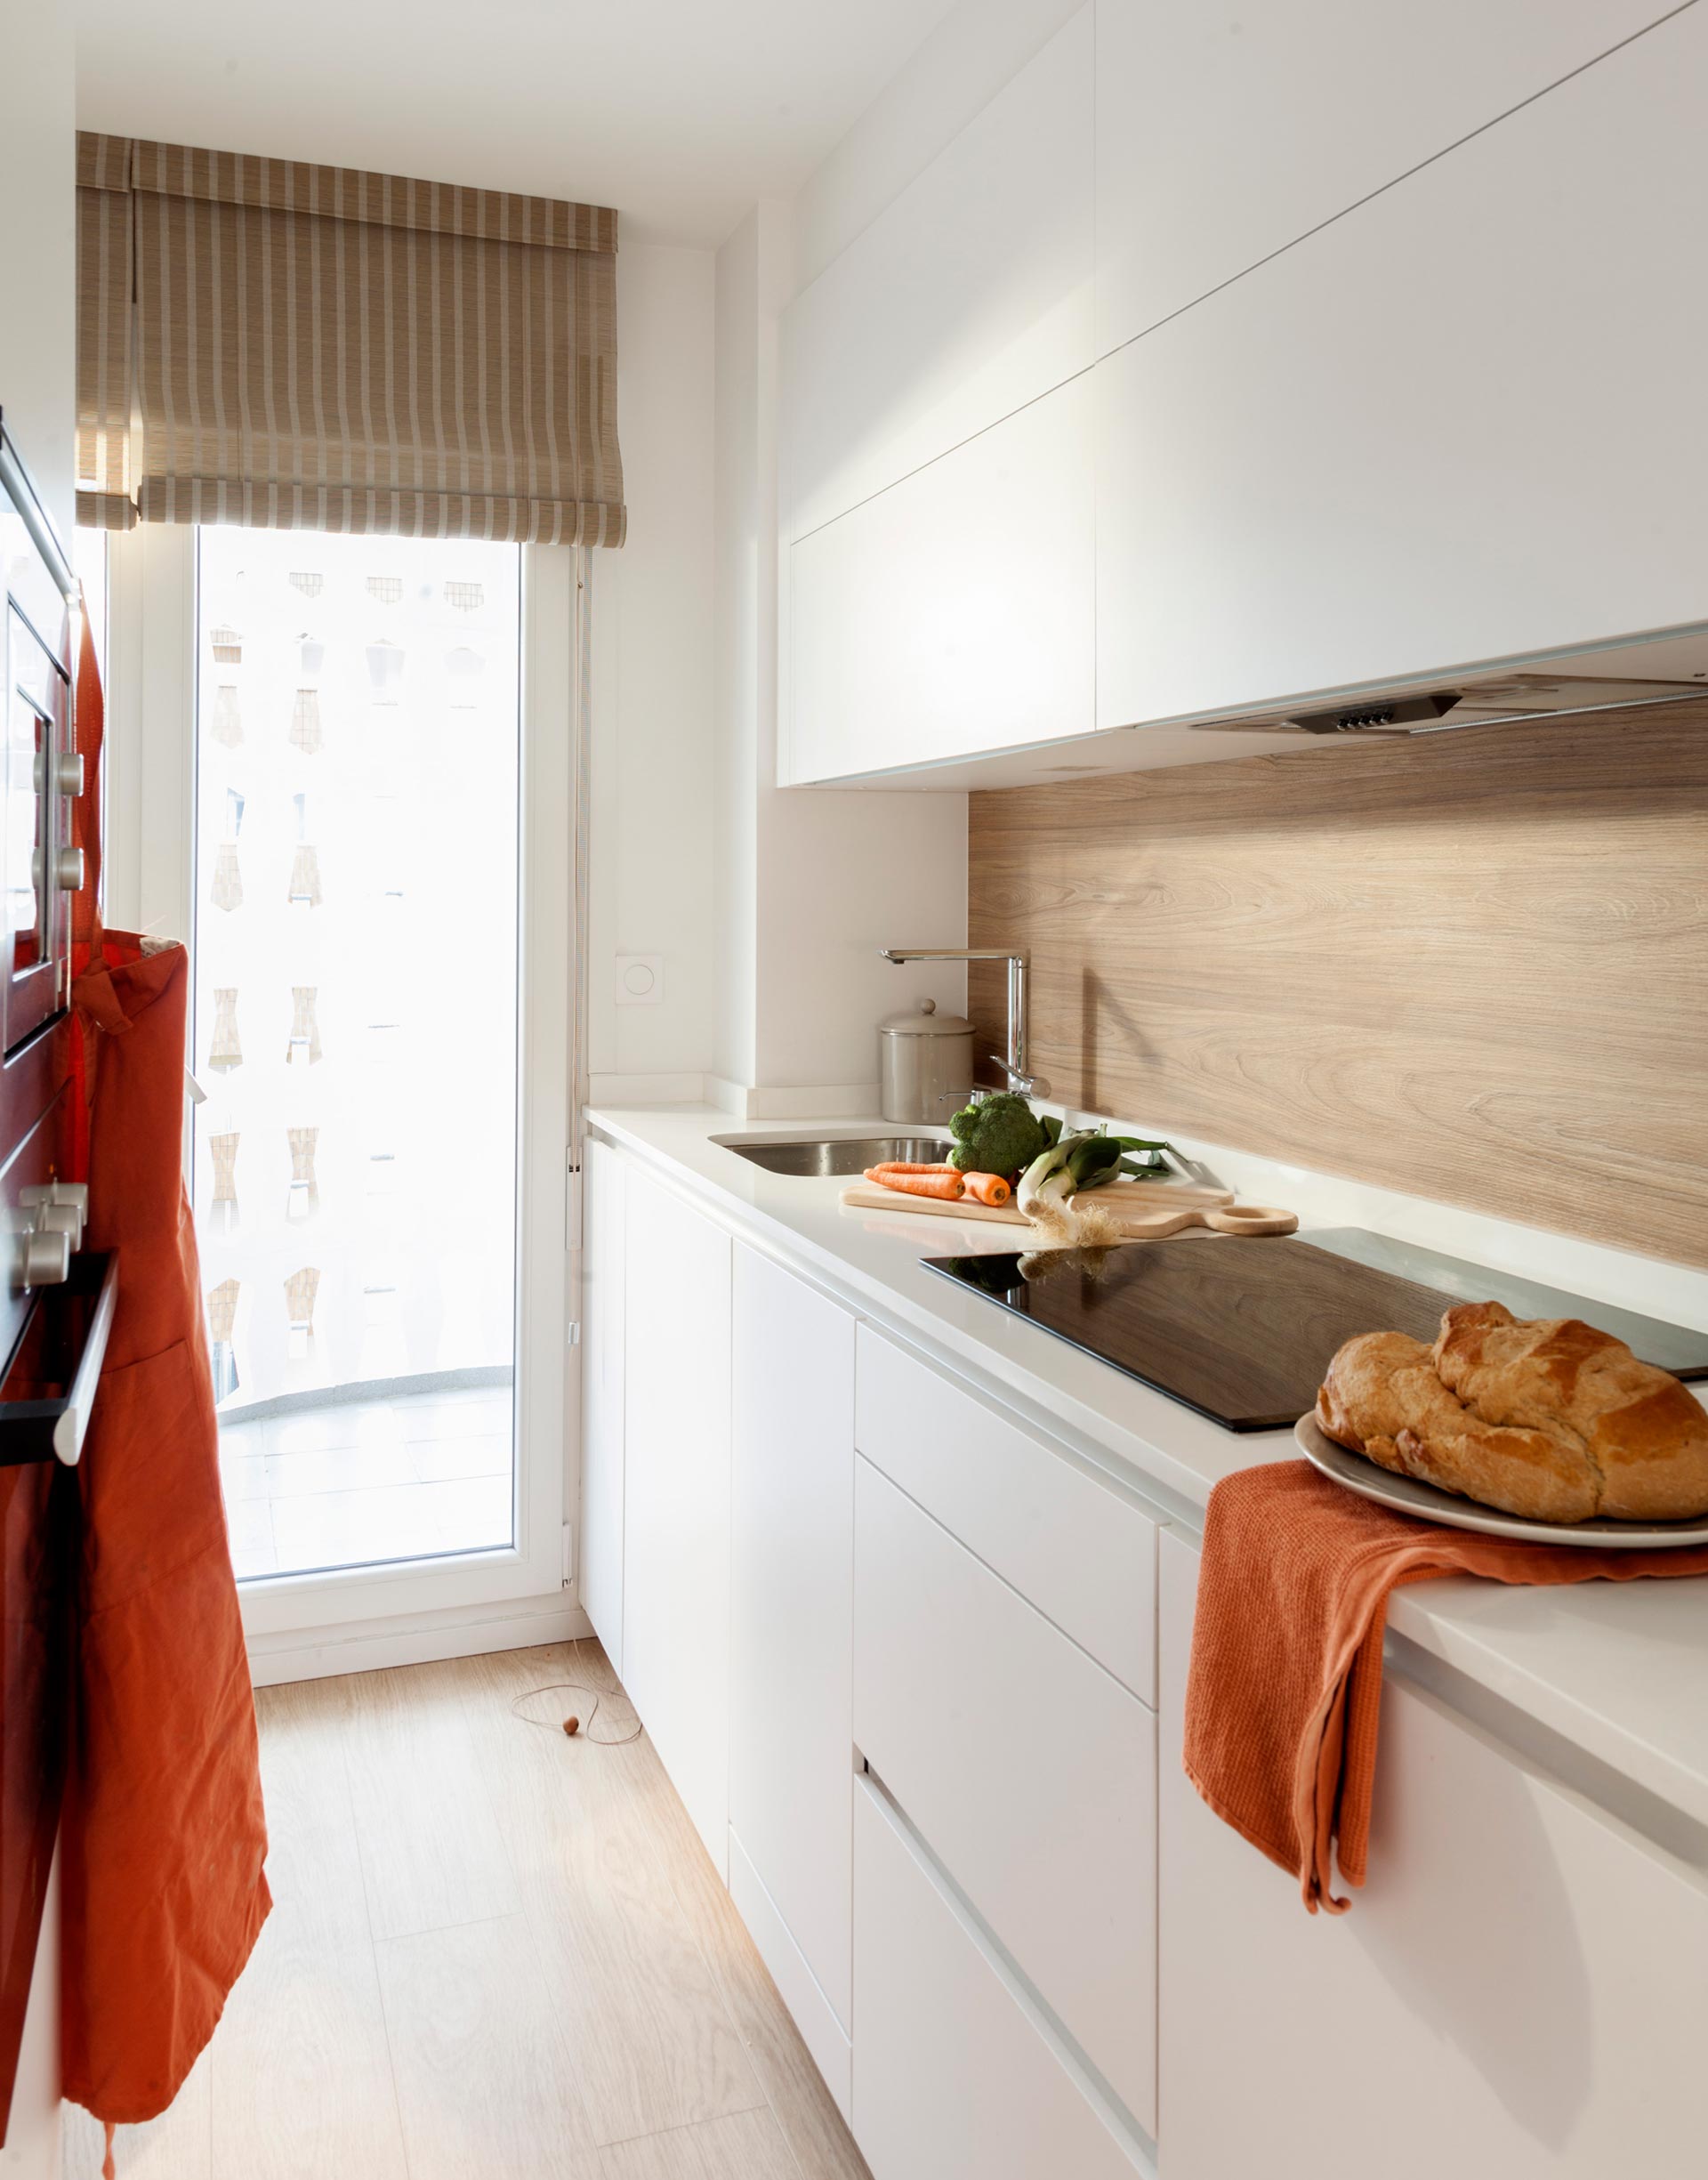 Santos kitchens in small rooms, by the designer Natalia Zubizarreta